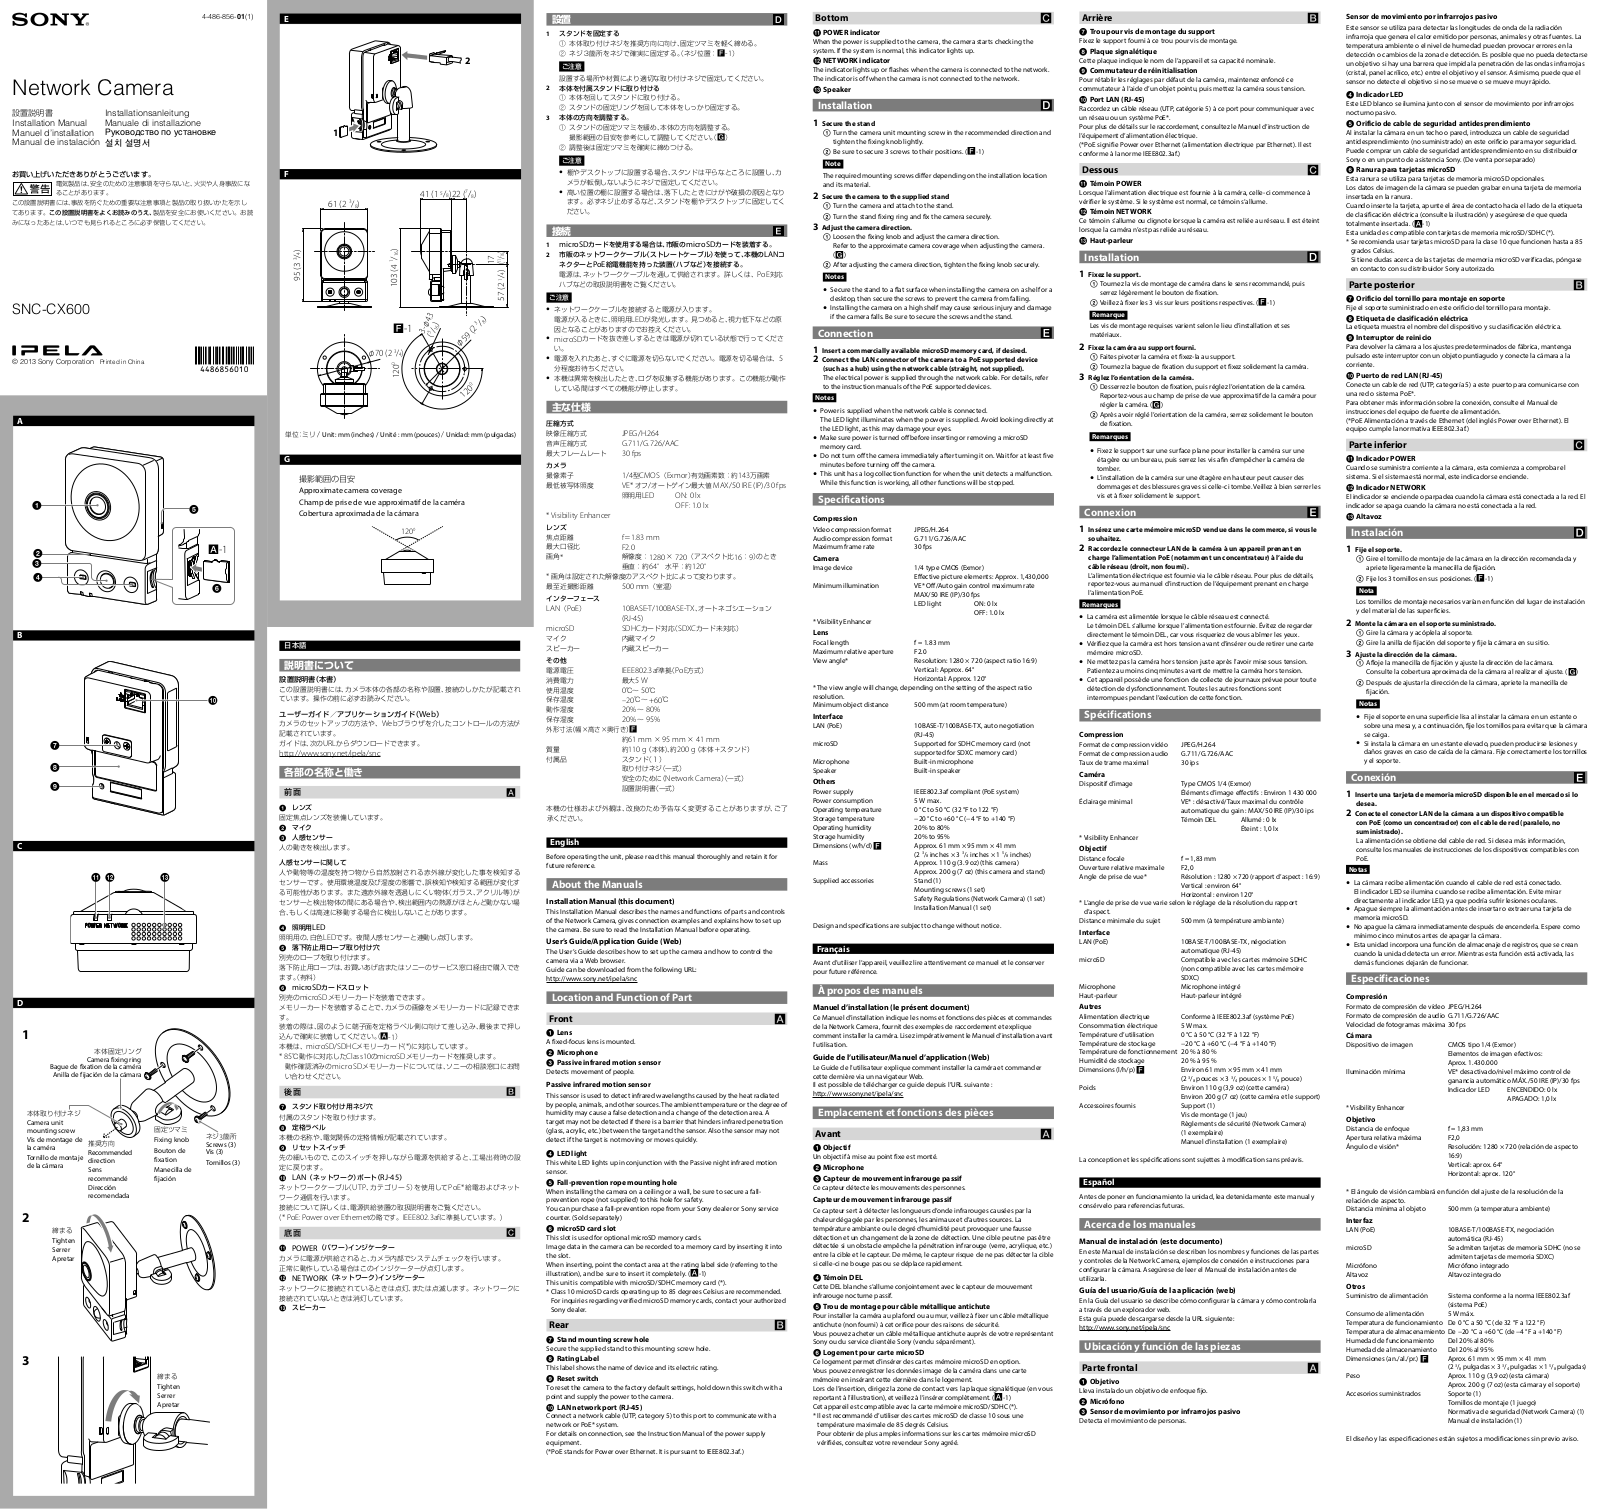 Sony SNC-CX600 User Manual